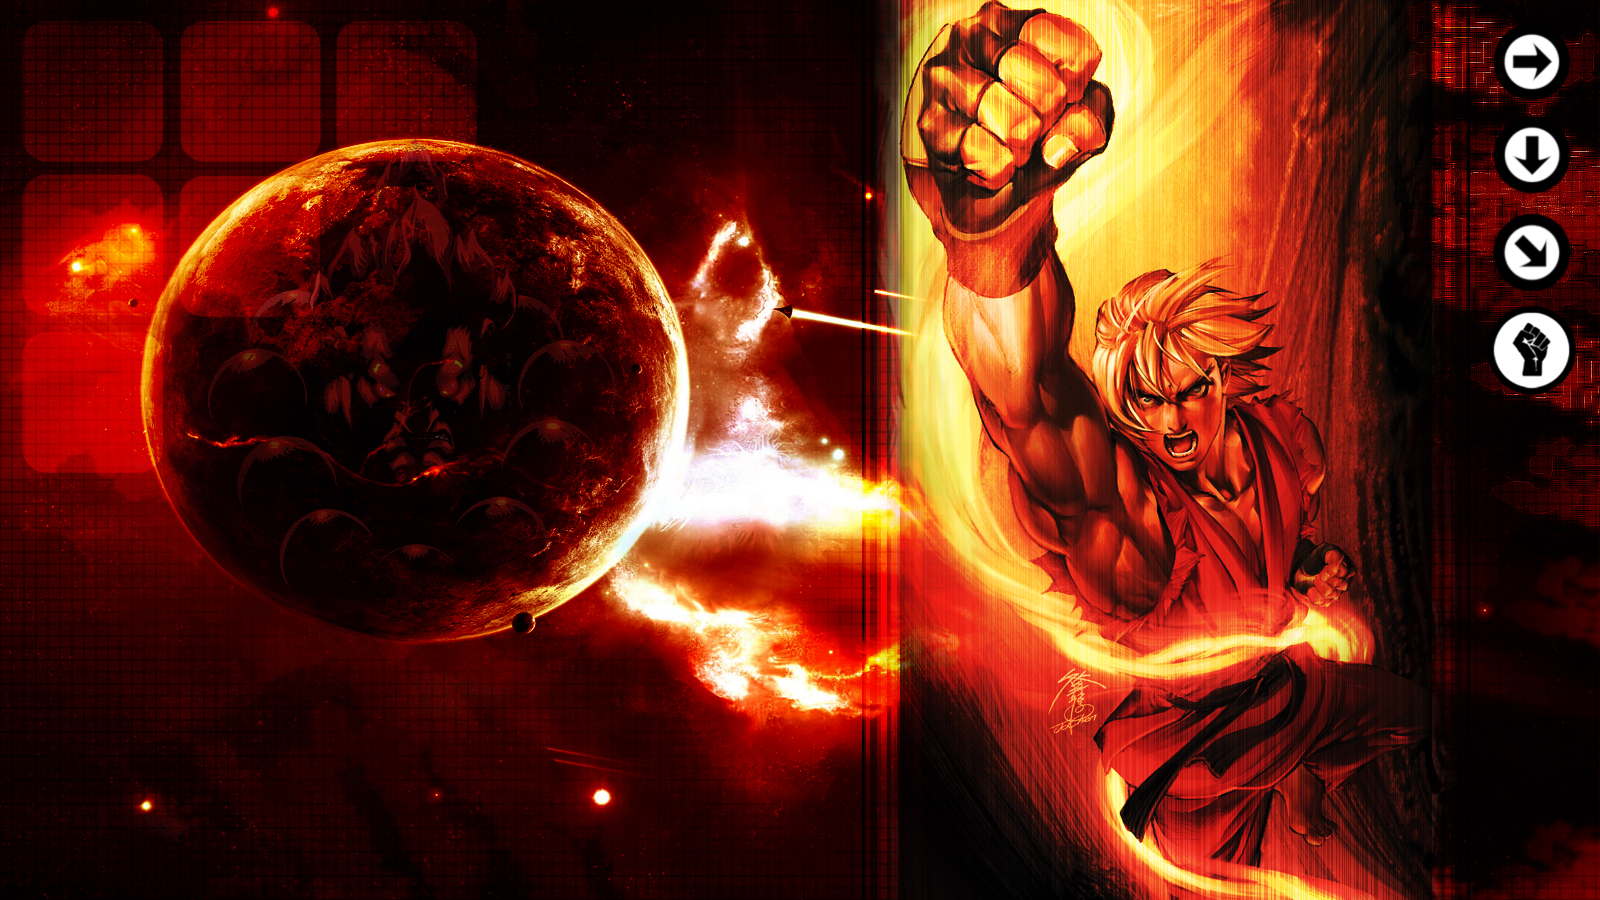 Ken Street Fighter Wallpaper